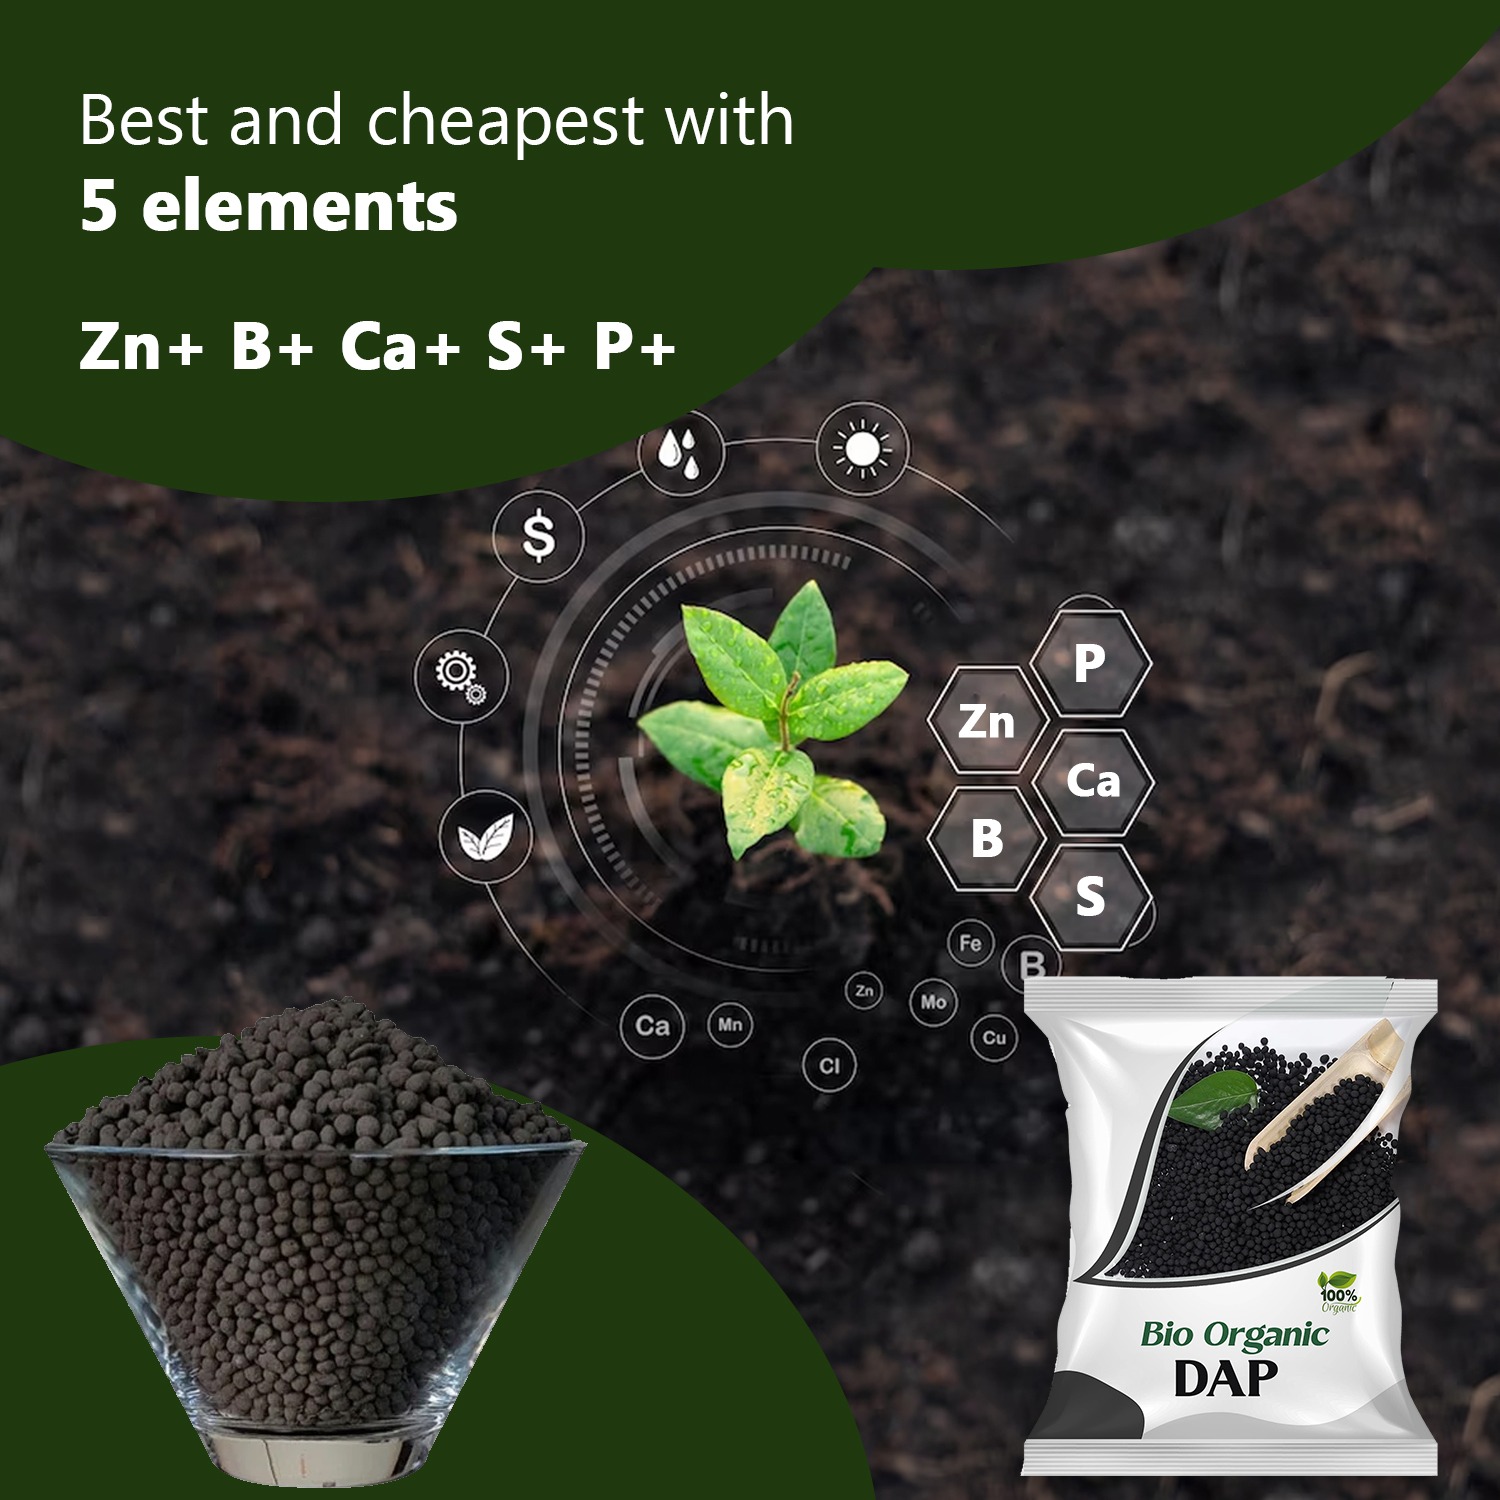 6005 SDF INDIA Bio Organic DAP Fertilizer for Crops ( 10 KG )(SDF10BOD)(6005_DAP_10KG)